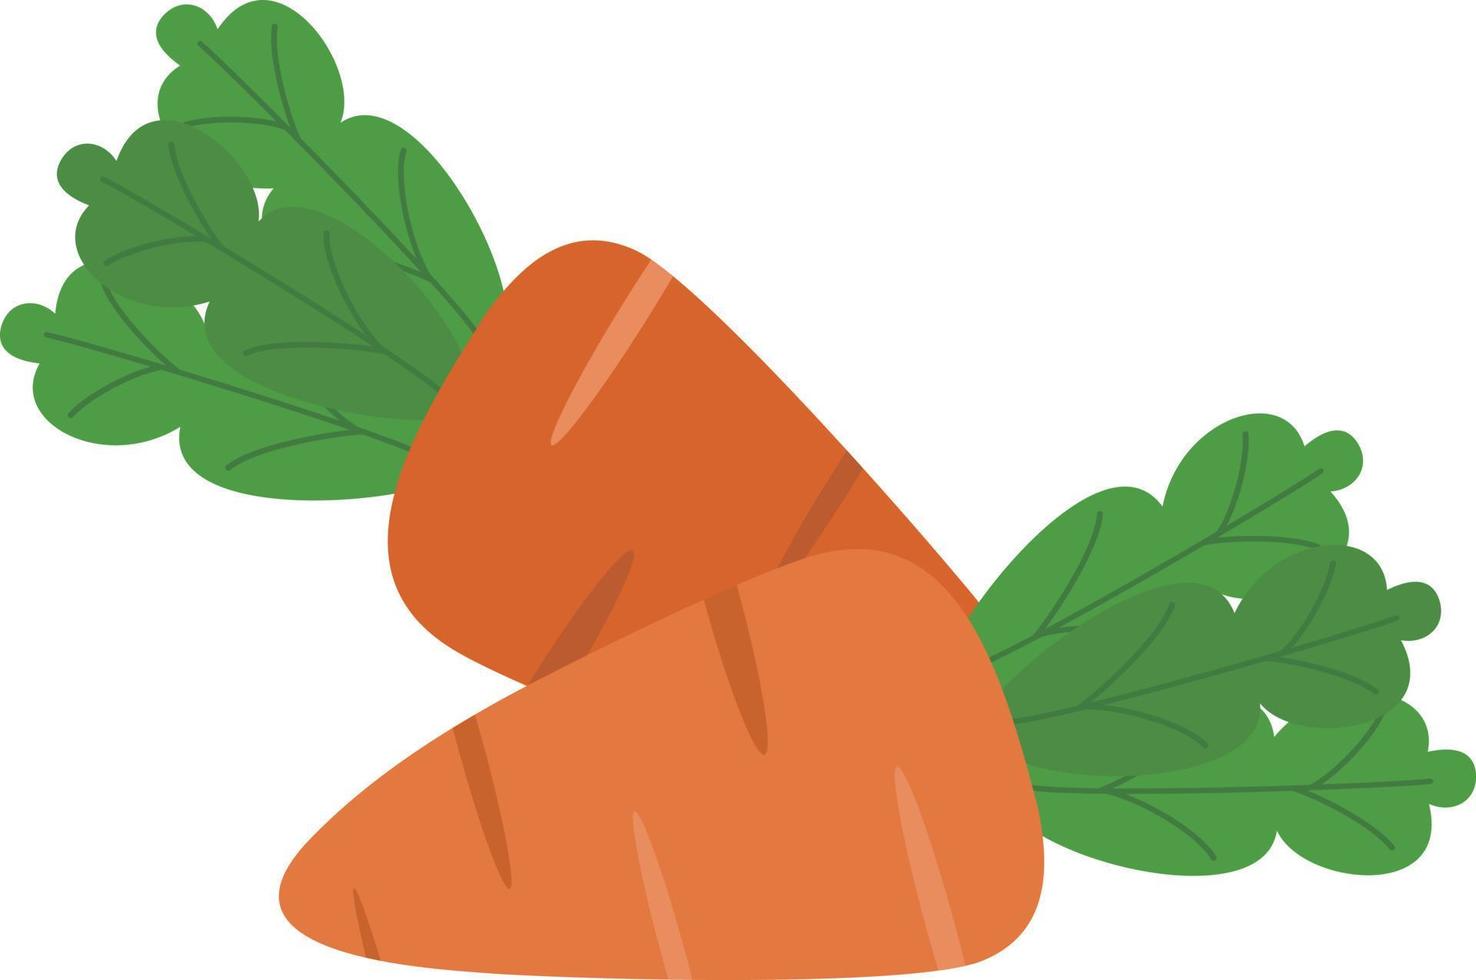 Orange carrot with leaves vector design, vegetable illustration element.